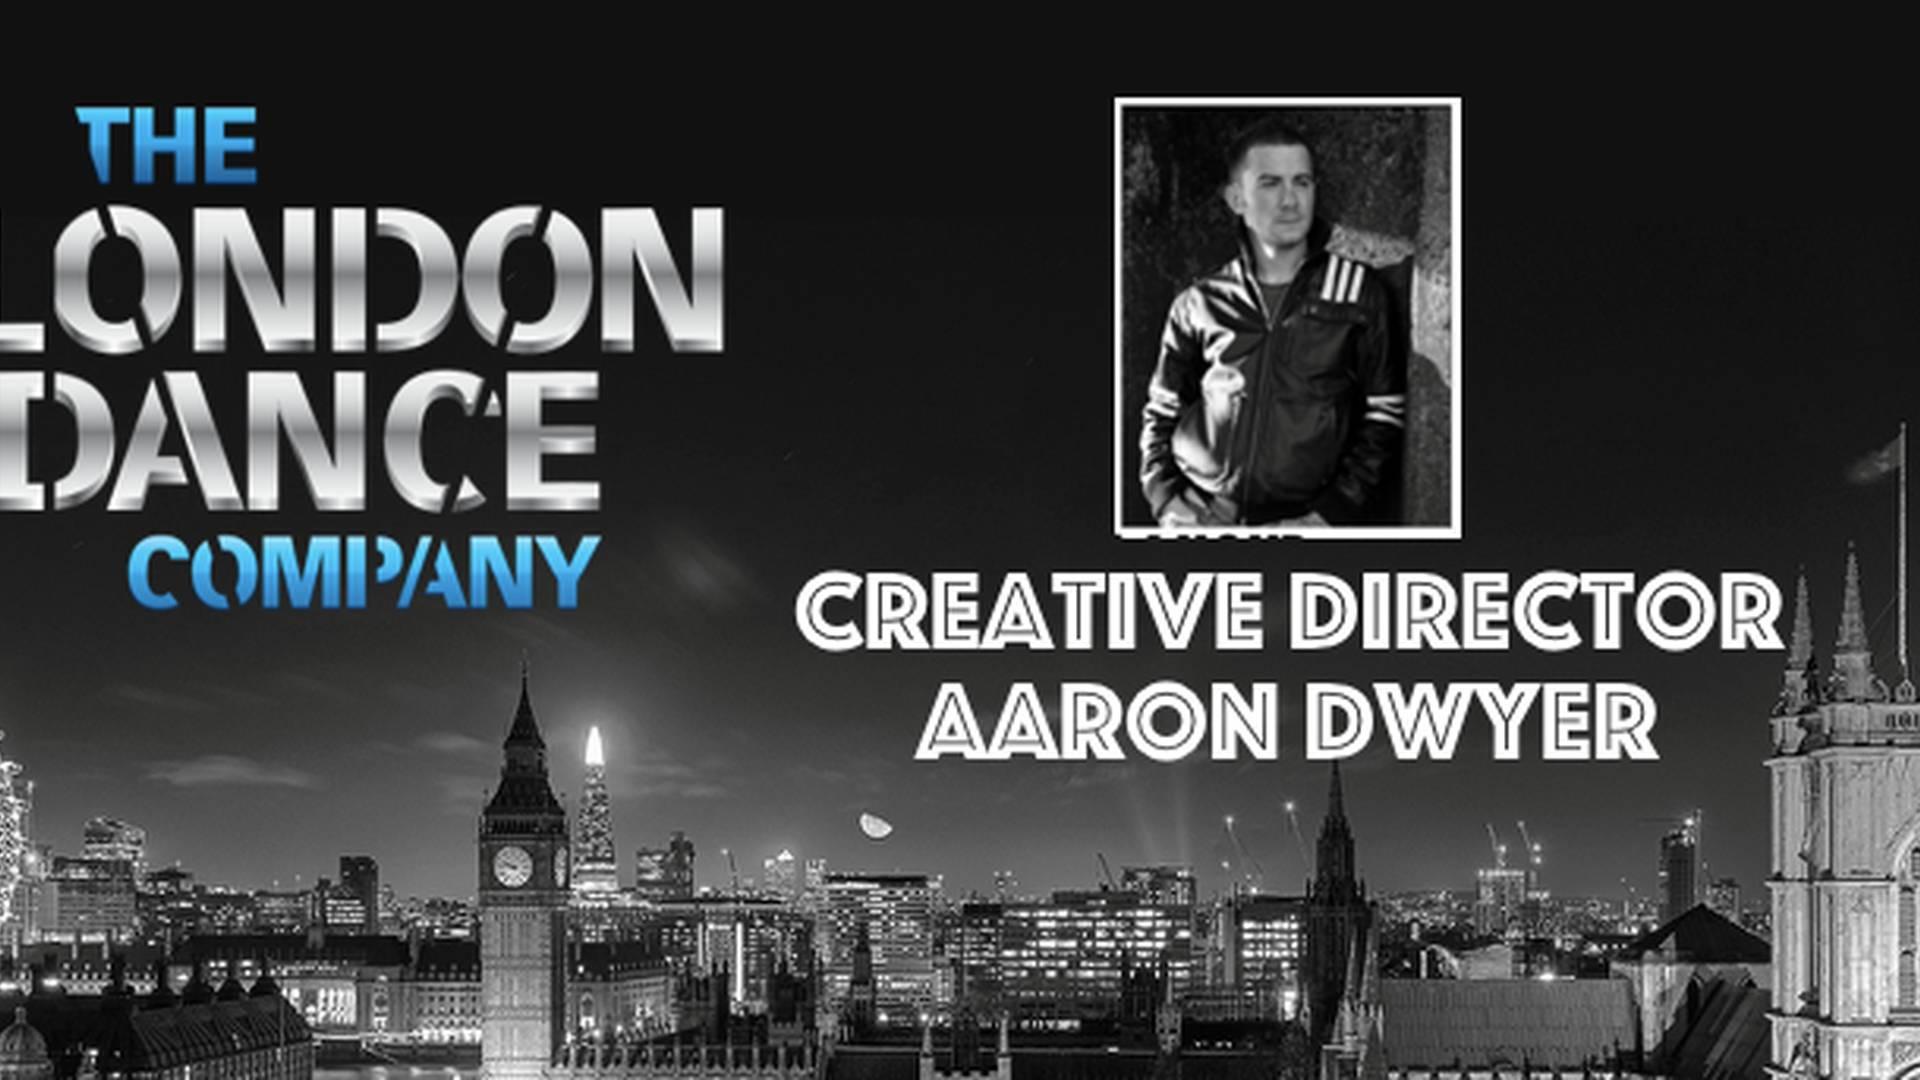 The London Dance Company photo